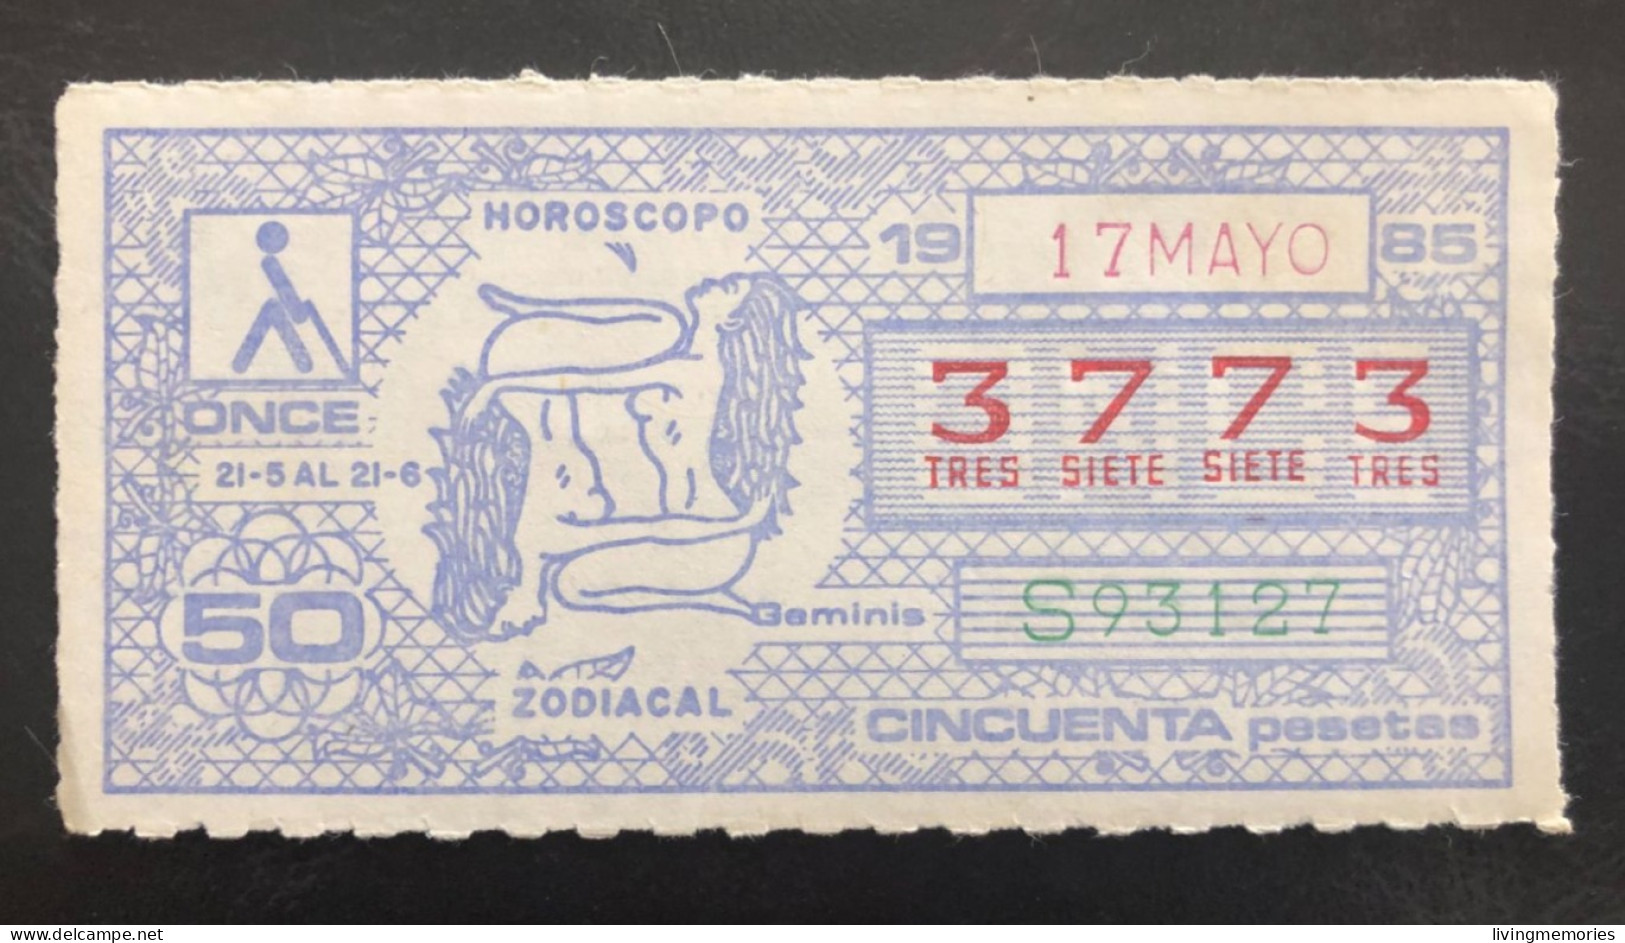 SUB 115A,  CAPICUA Lottery Ticket, Spain, ONCE, « Horoscopo Zodiacal », « Geminis », # 3773, 1985 - Billetes De Lotería